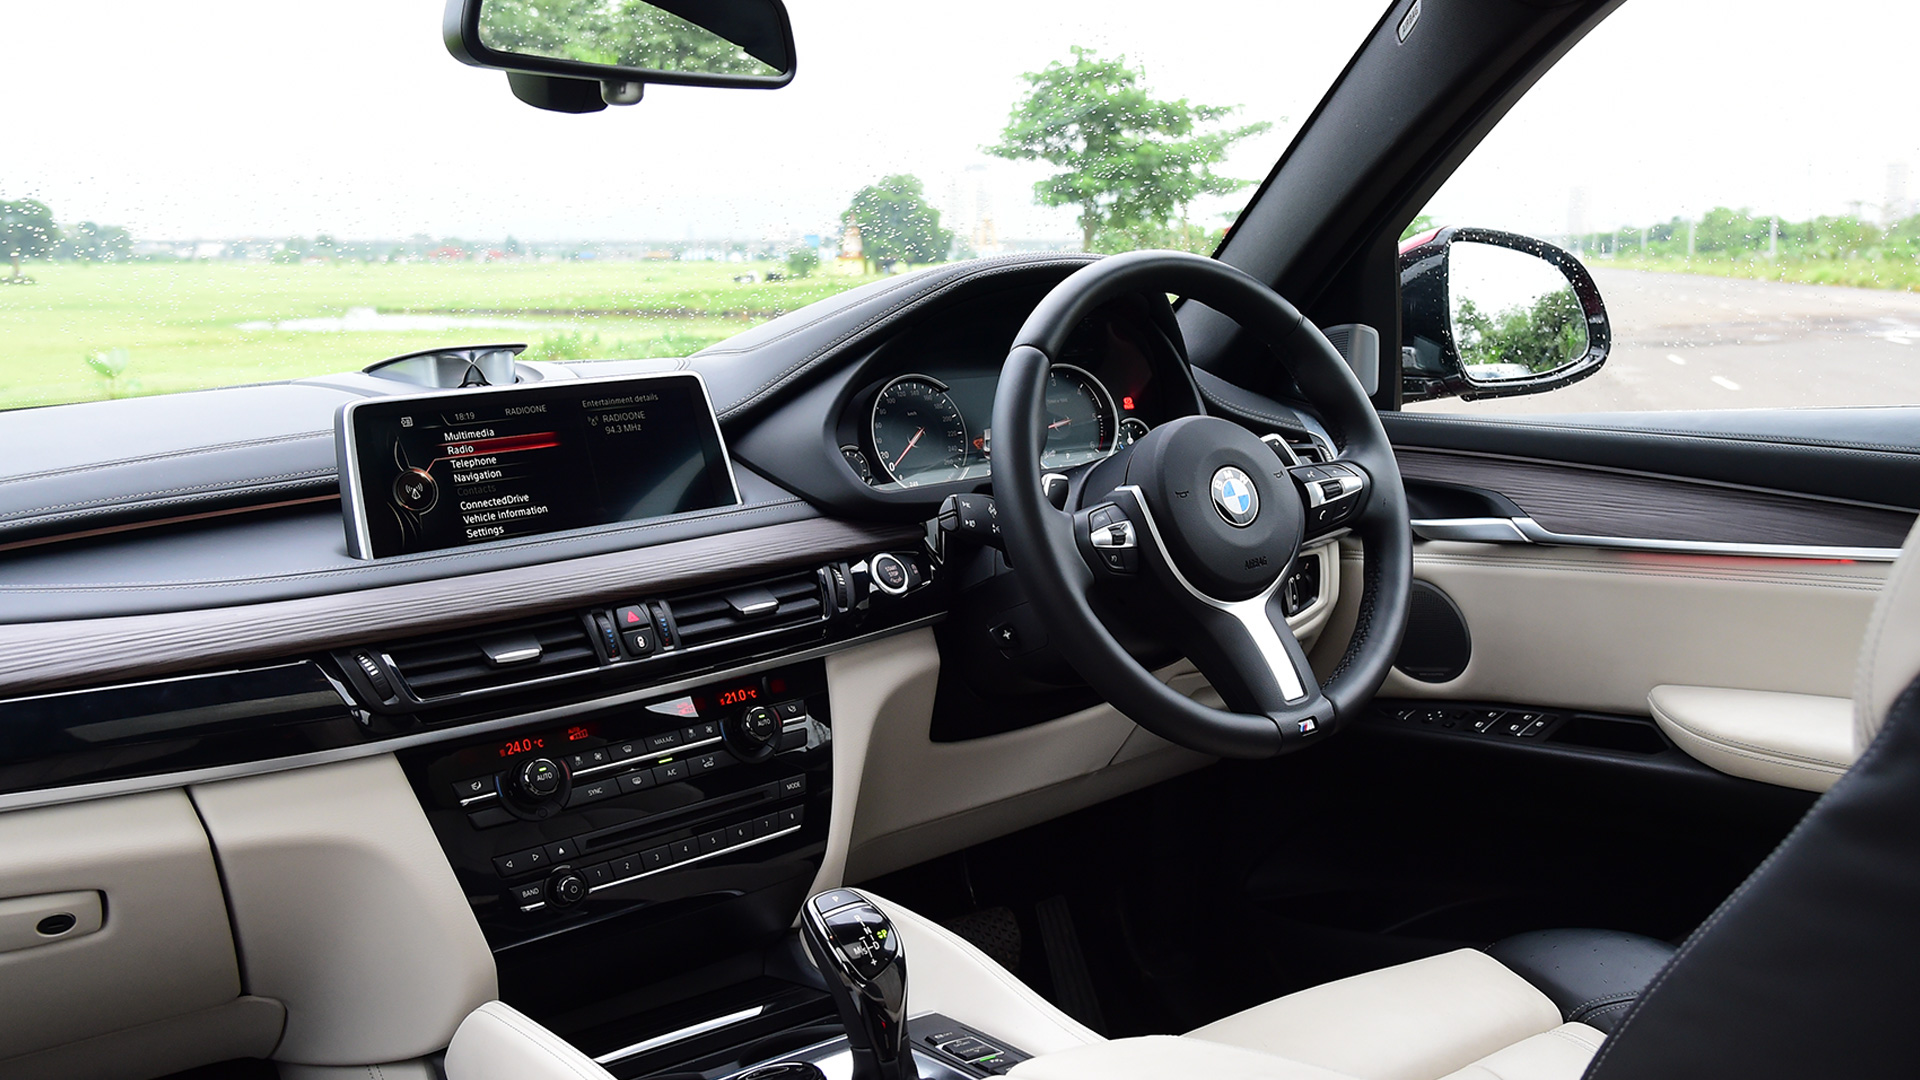 BMW X6 2015 xDrive40d M Sport Exterior